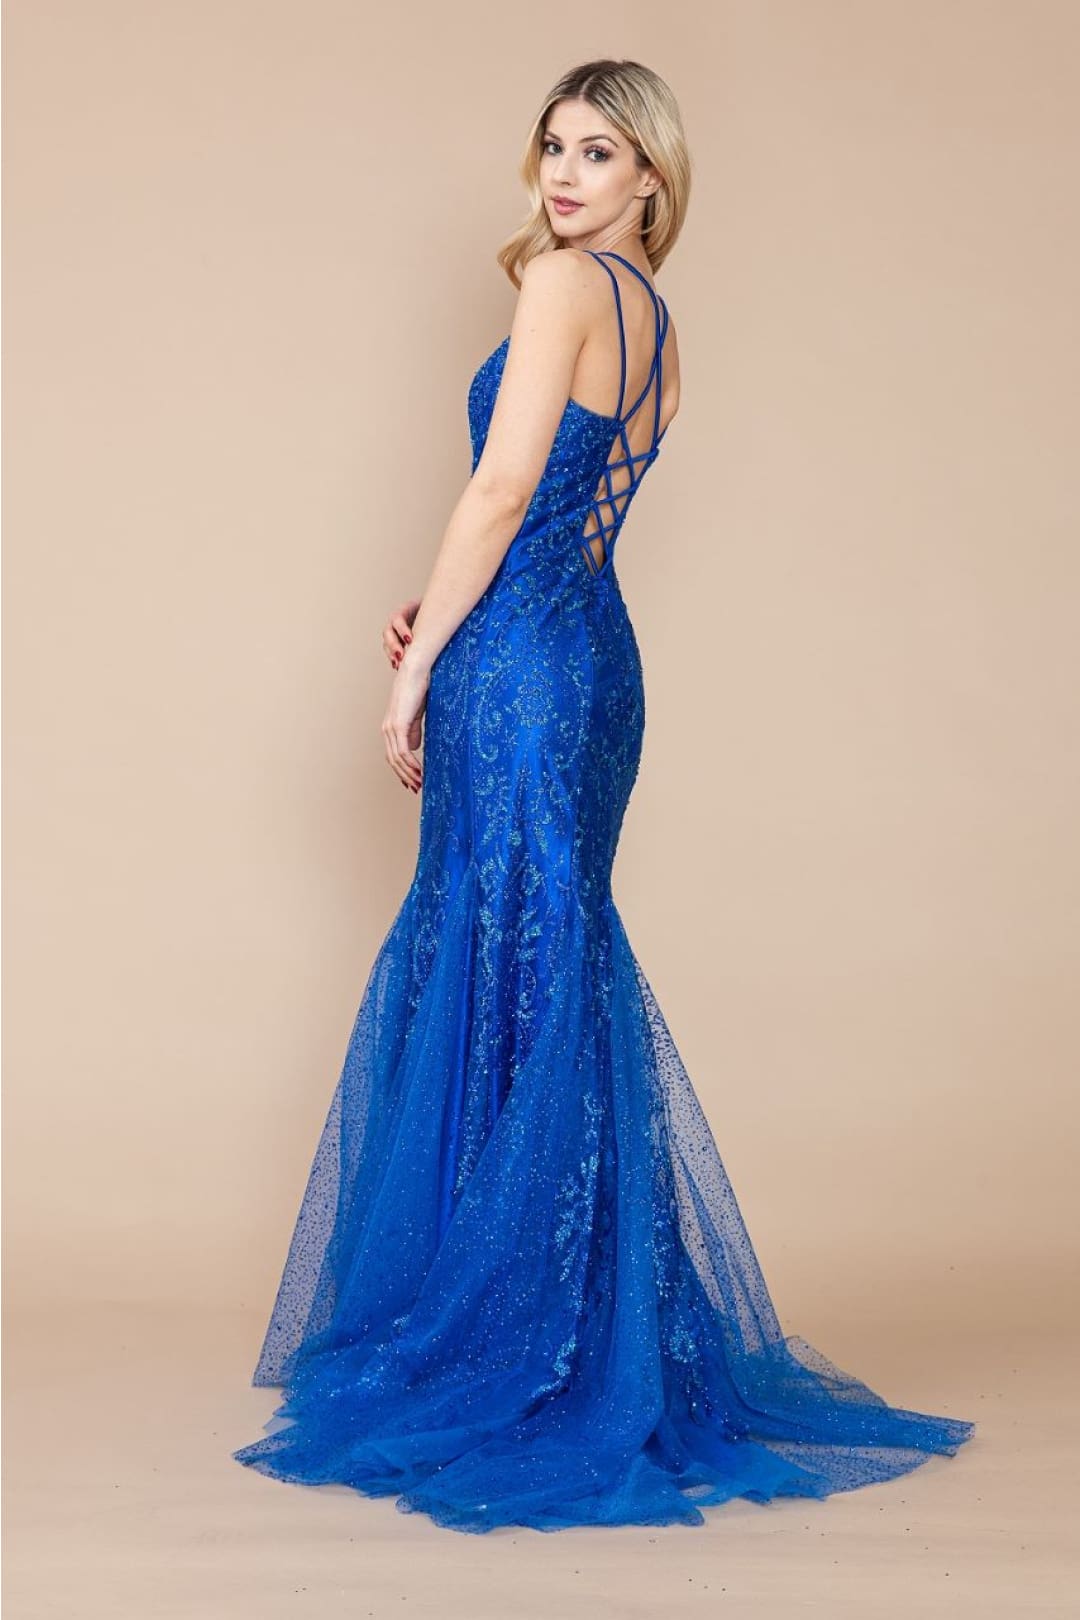 Poly USA 9306 Double Spaghetti Strap Glitter Print Mermaid Prom Gown - Dress